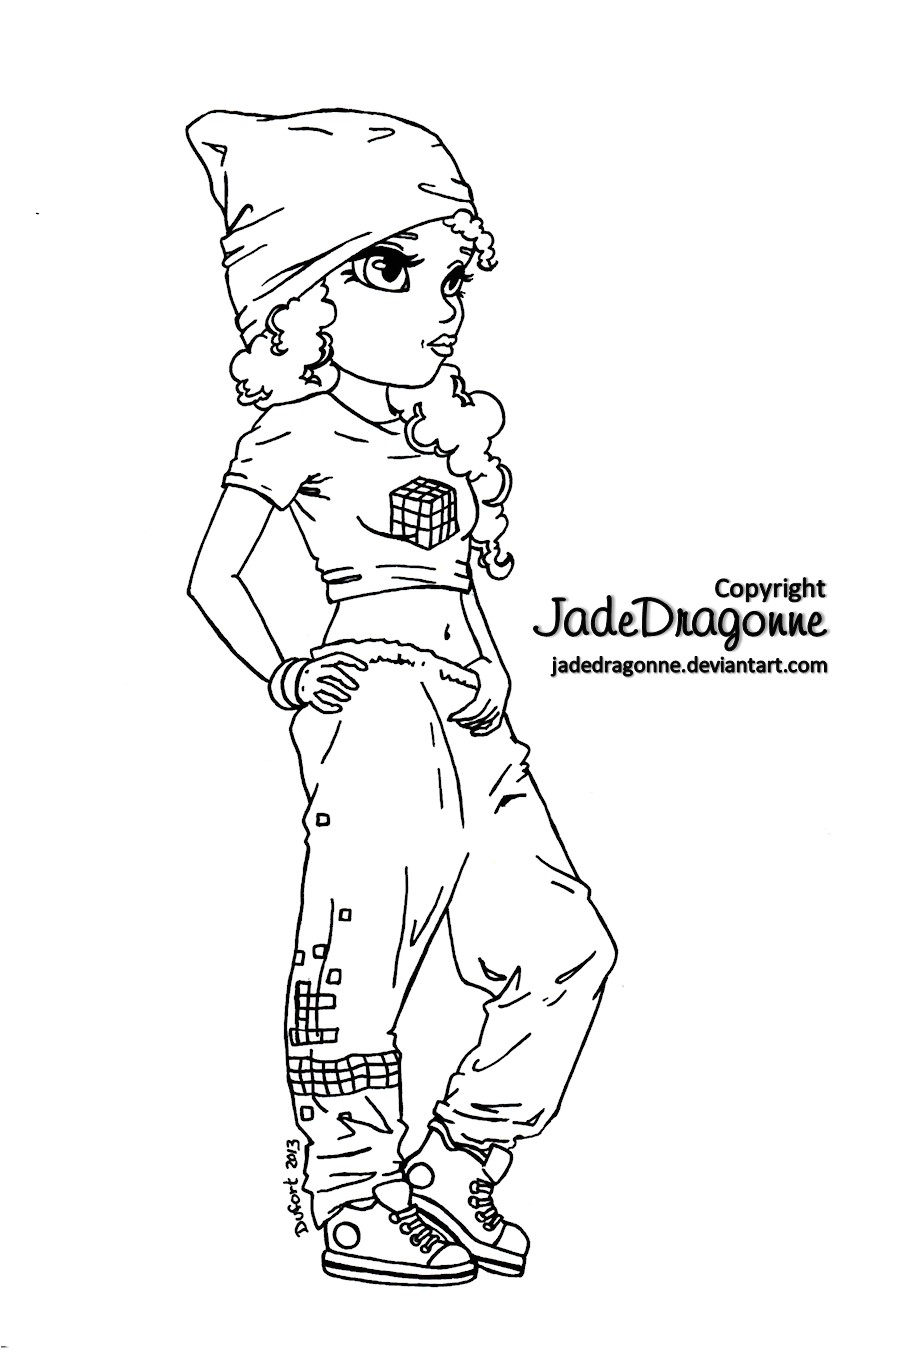 Hip Hop Dancer Lineart by JadeDragonneviantart on deviantART